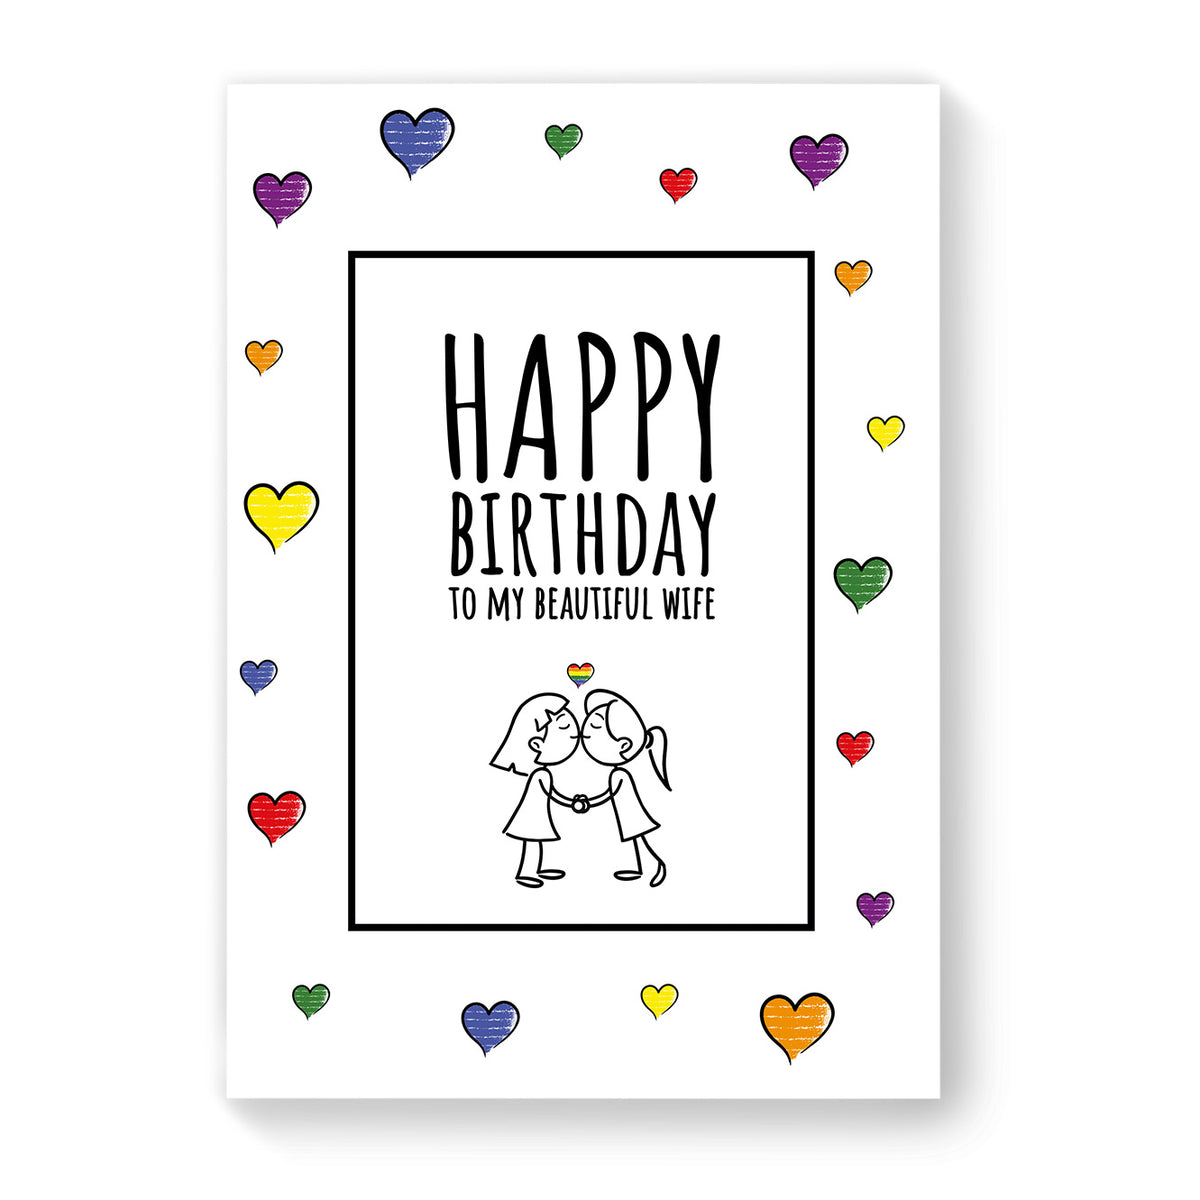 Happy Birthday to my beautiful wife - Lesbian Gay Birthday Card - White Heart | Gift